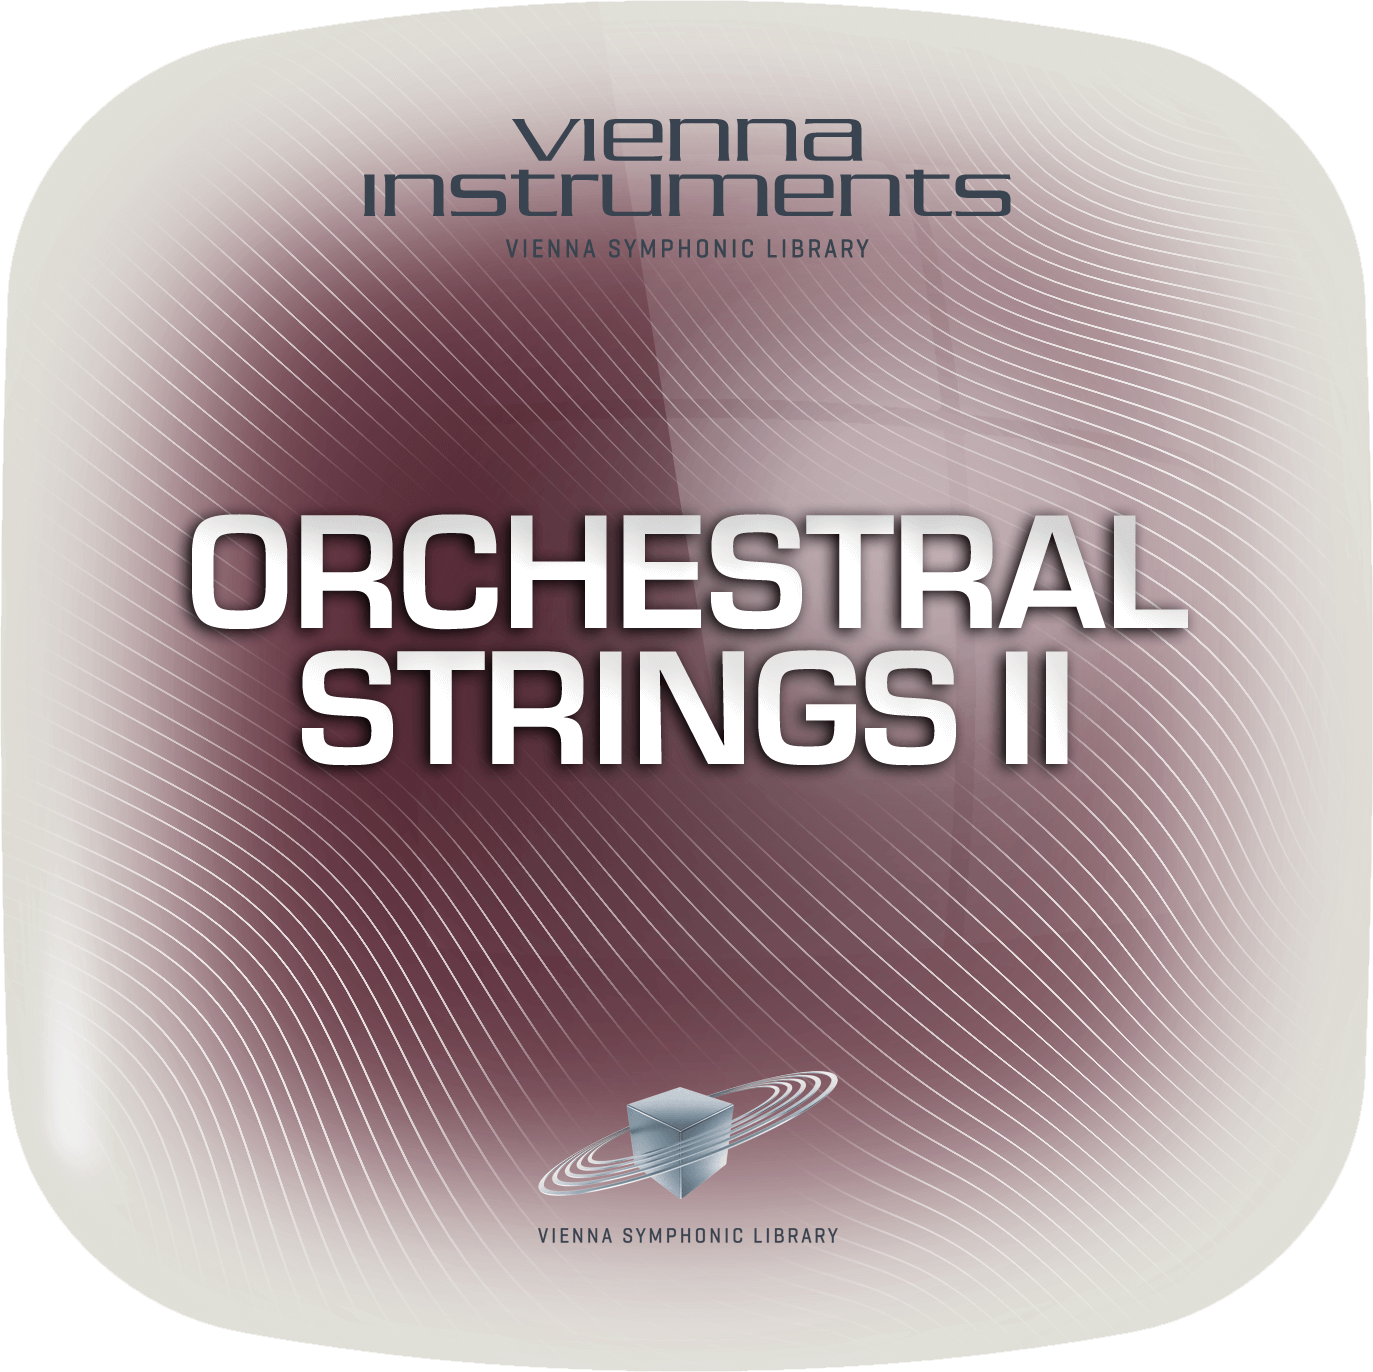 VSL Vienna Instruments: Orchestral Strings II